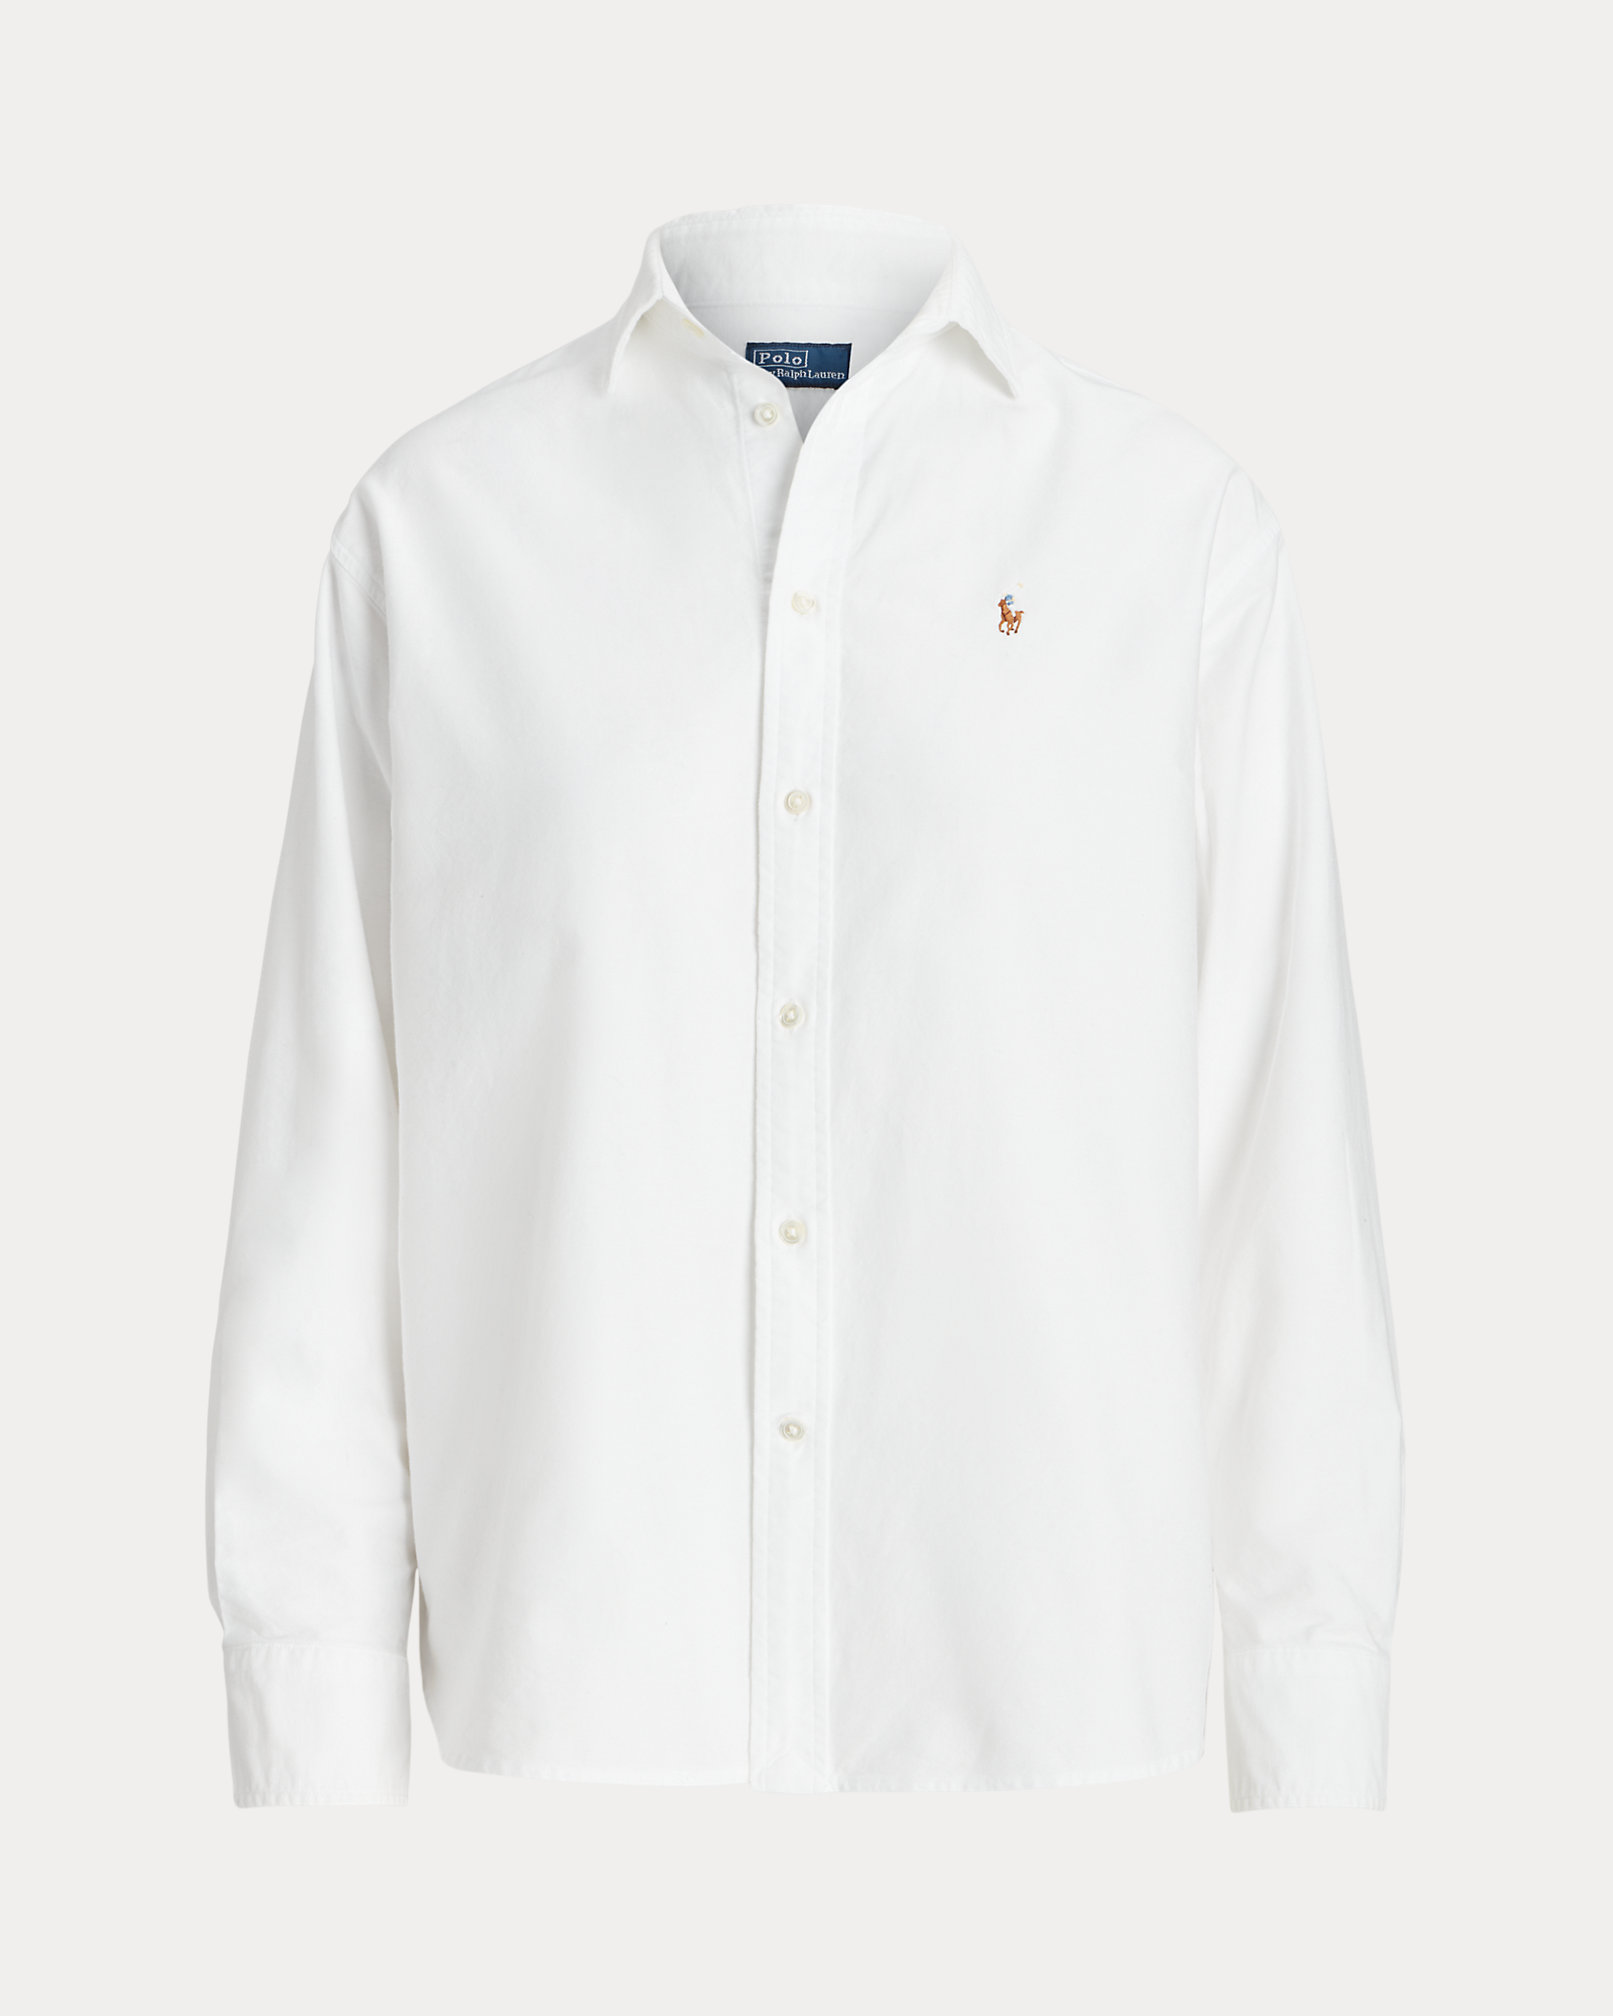 Ralph Lauren white shirt